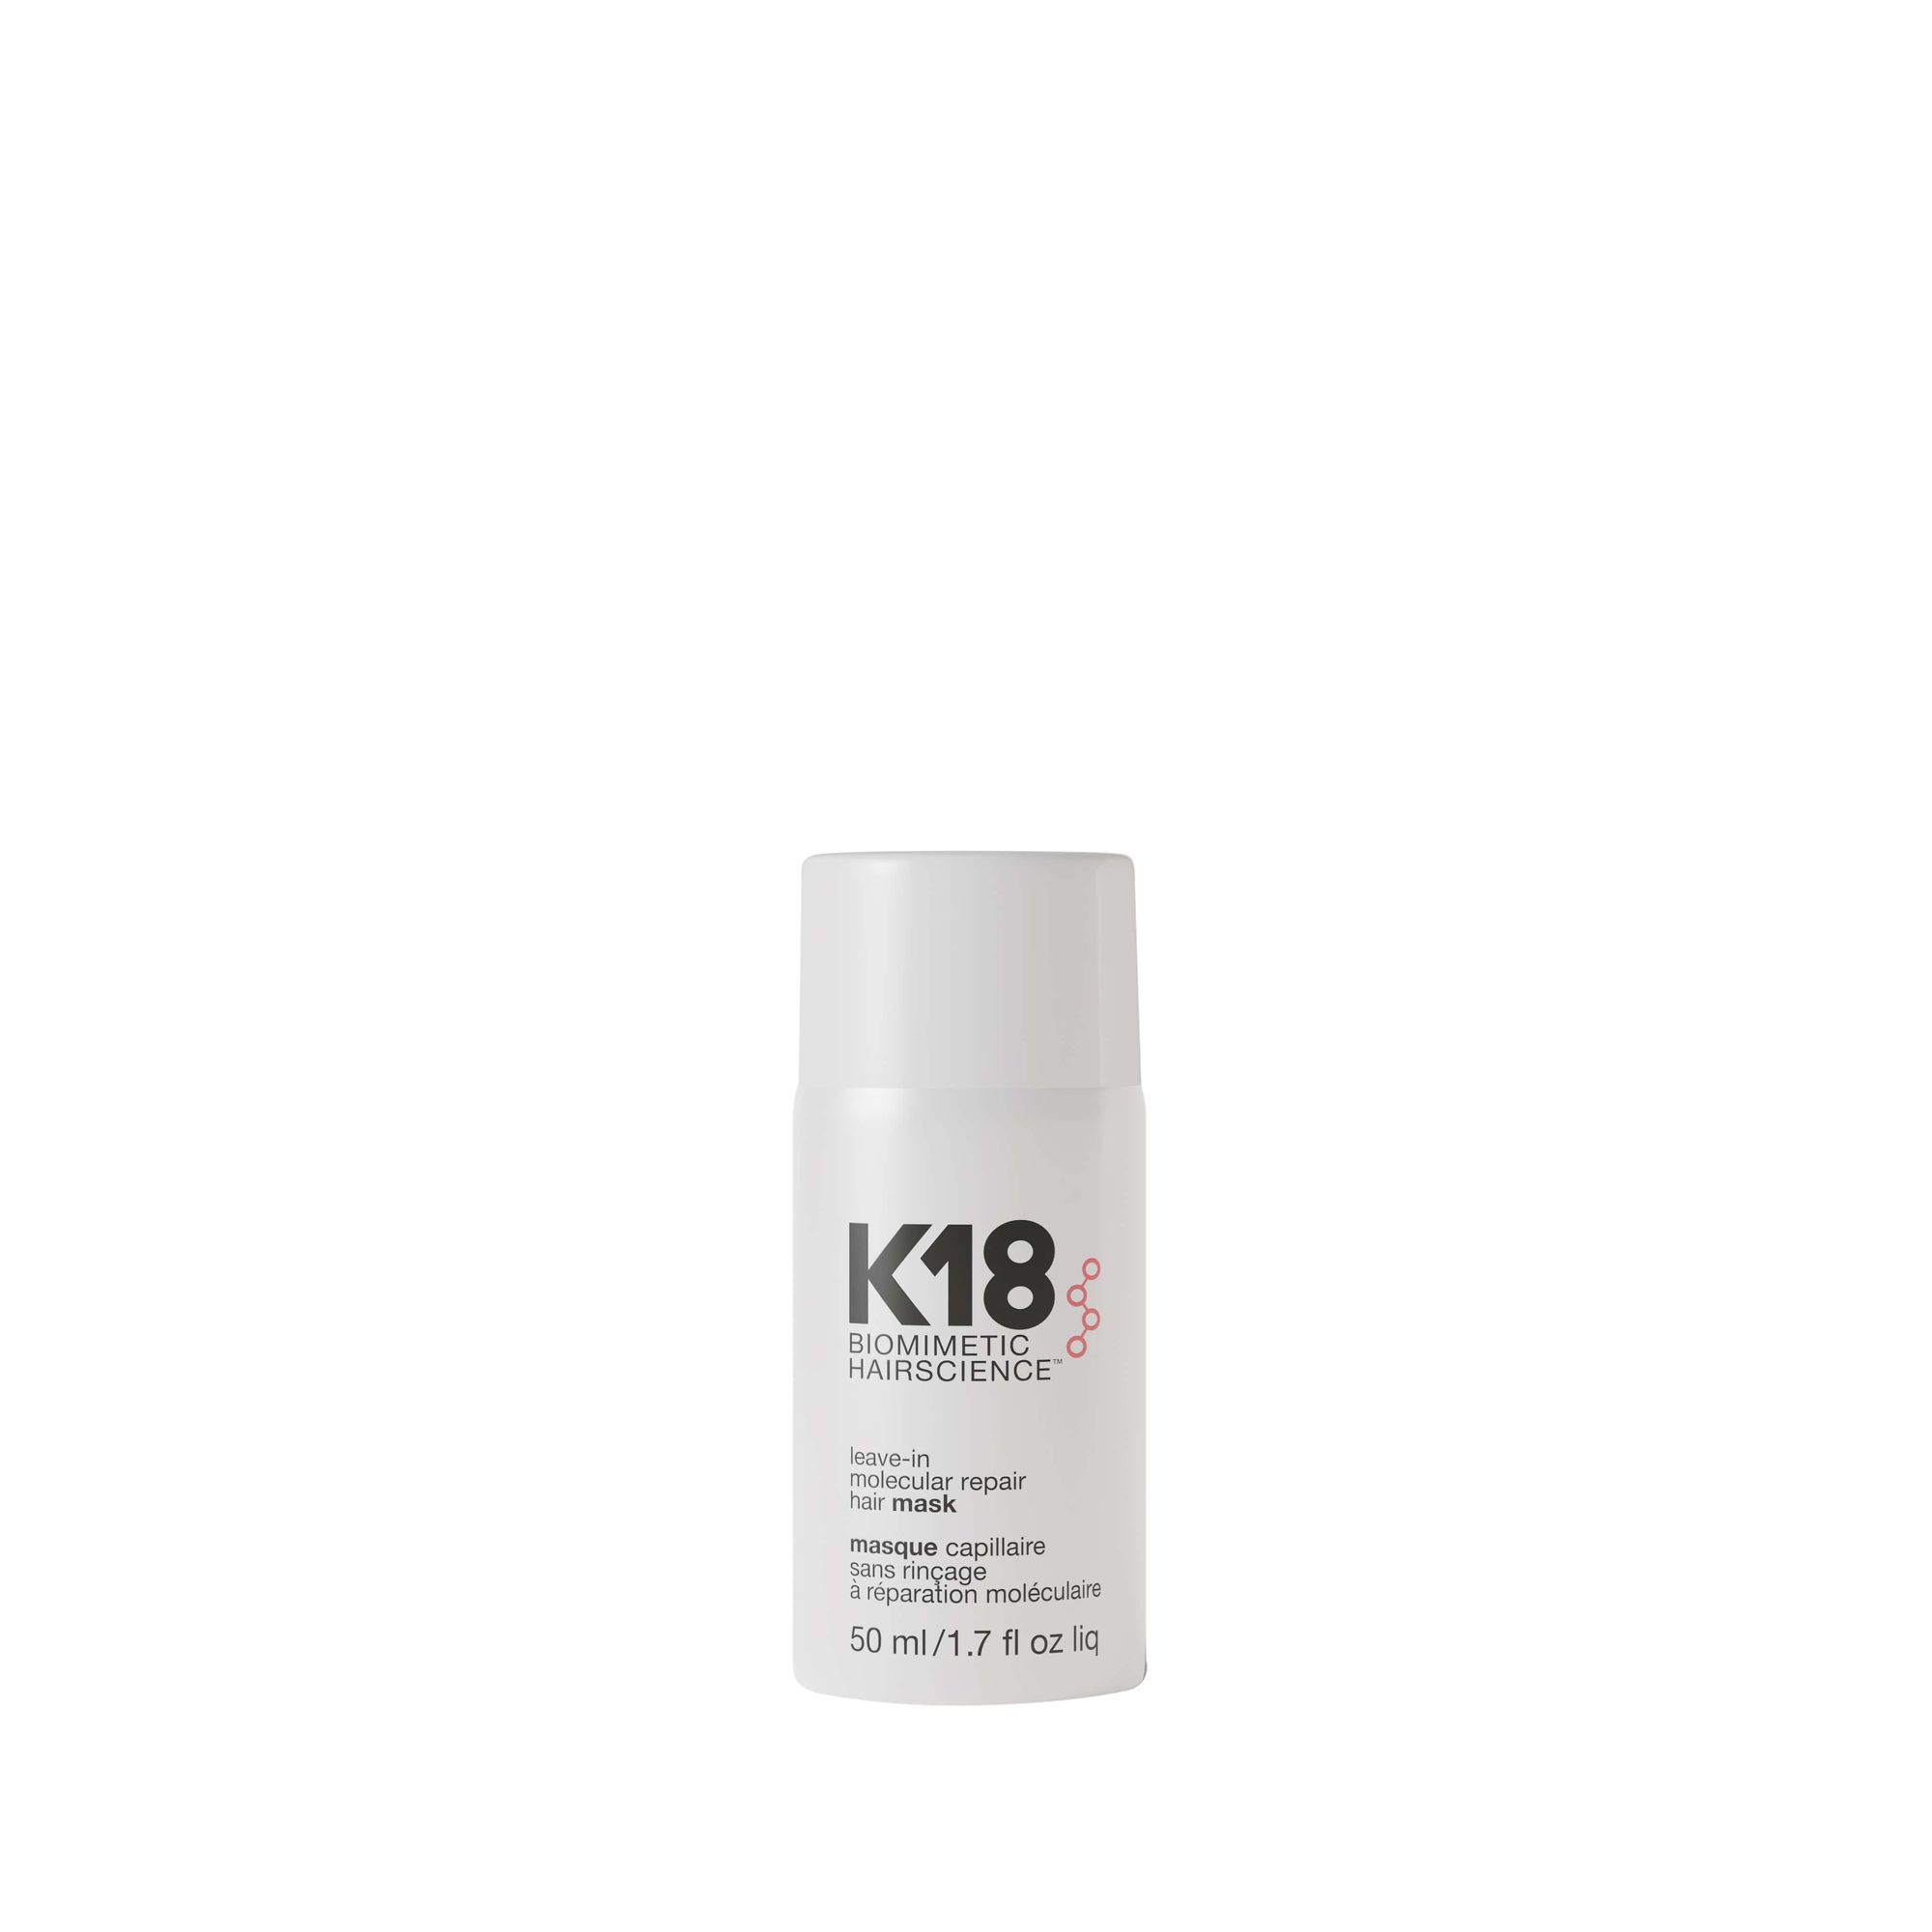 K18, Leave-In Molecular Repair Hair Mask